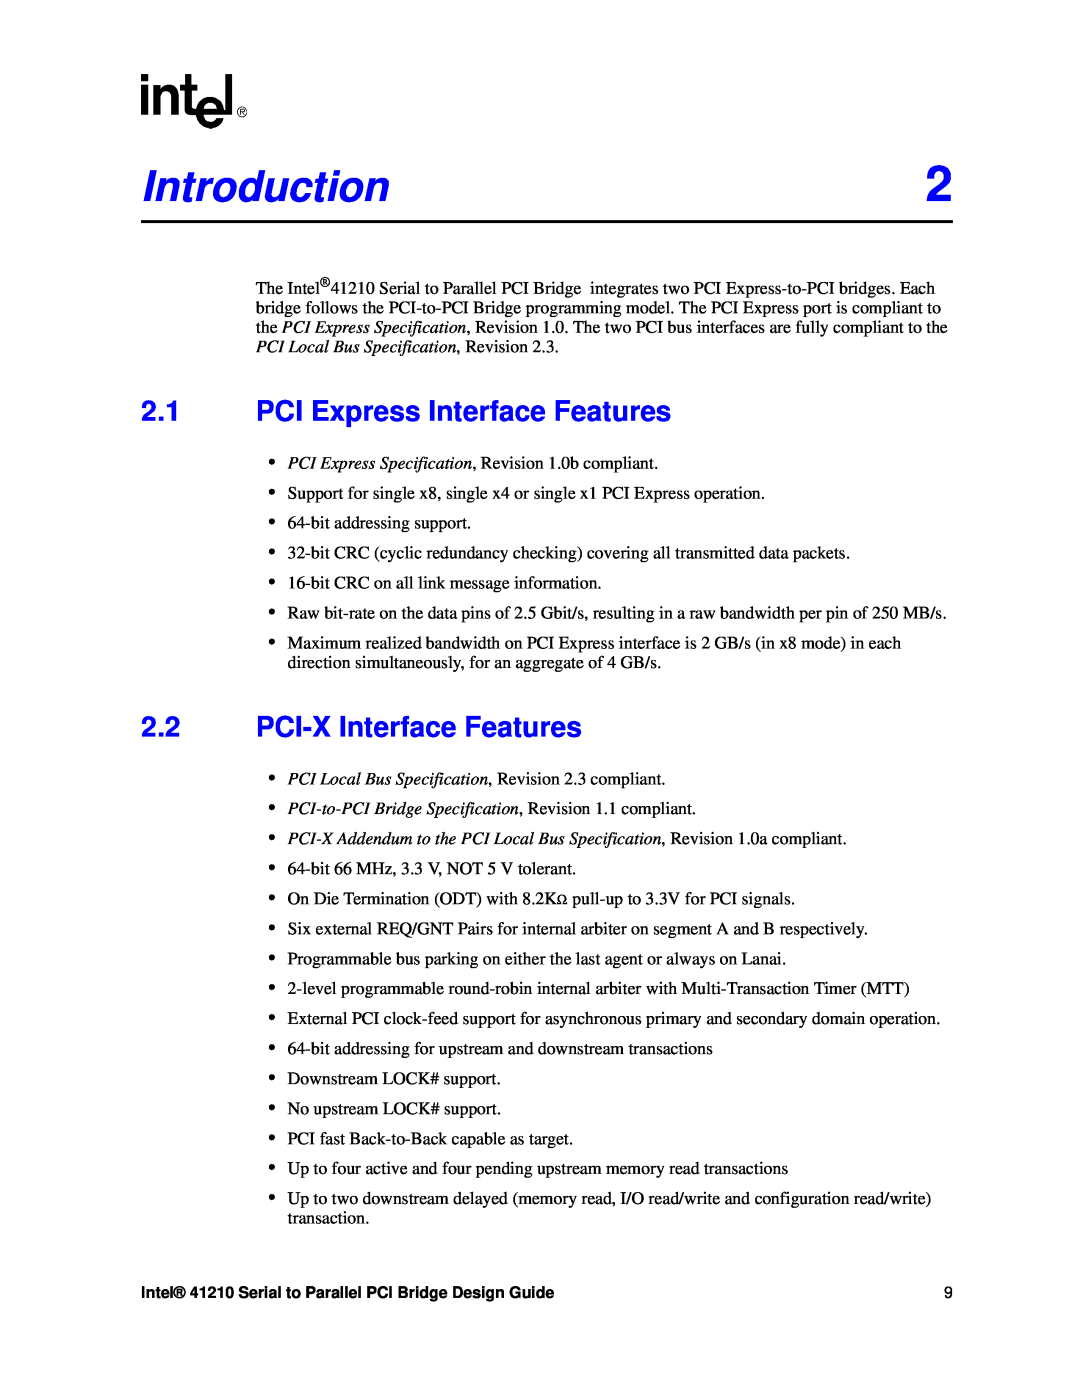 Intel 41210 manual Introduction2, PCI Express Interface Features, PCI-X Interface Features 